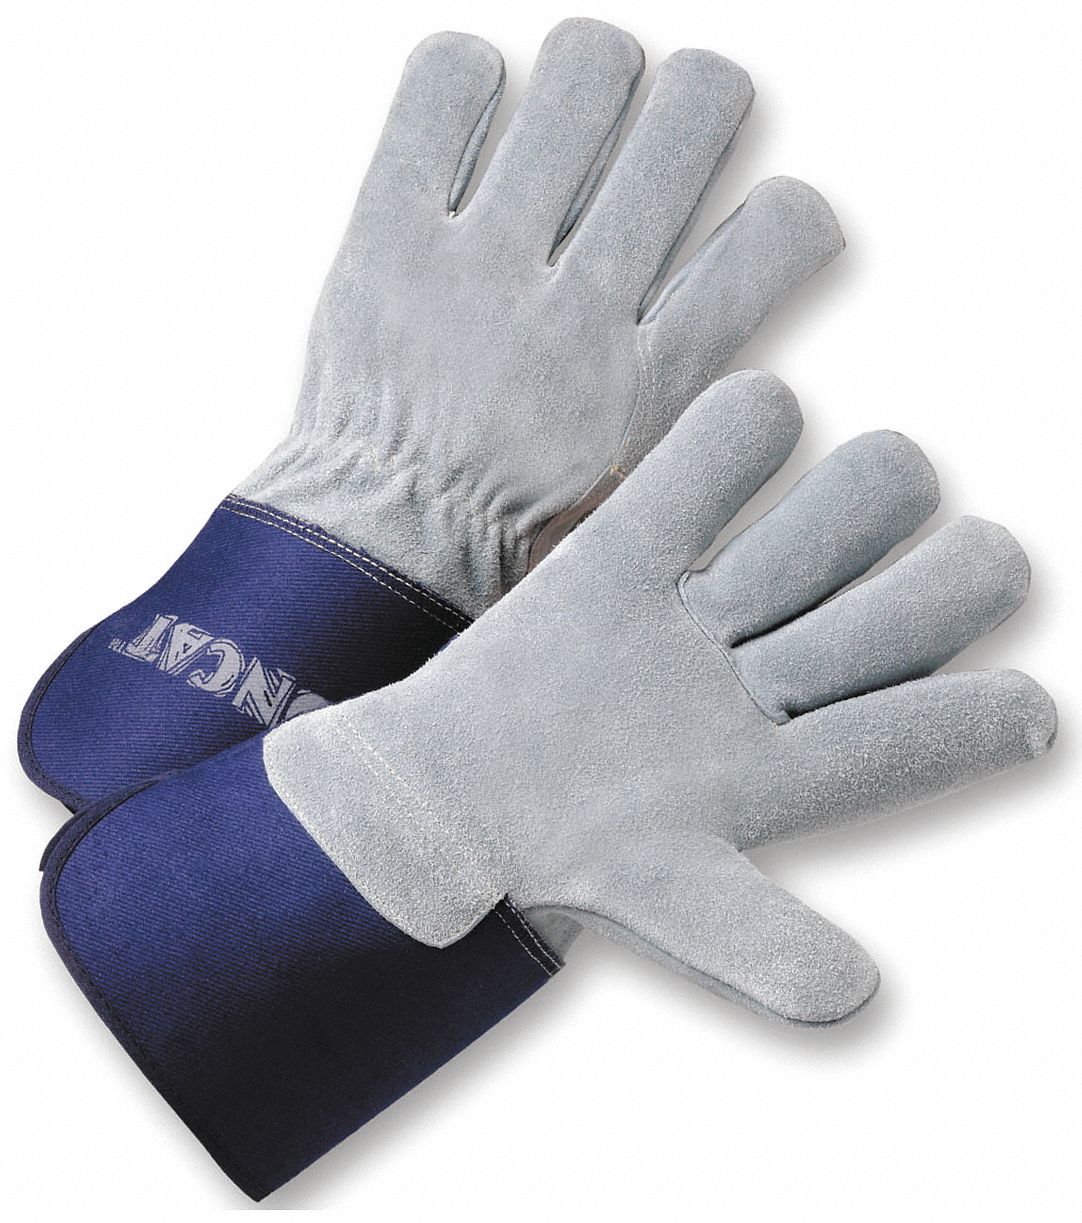 Leather Gloves: L ( 9 ), Cowhide, Premium, Glove, Full Finger, Gauntlet Cuff, Unlined, 12 PK